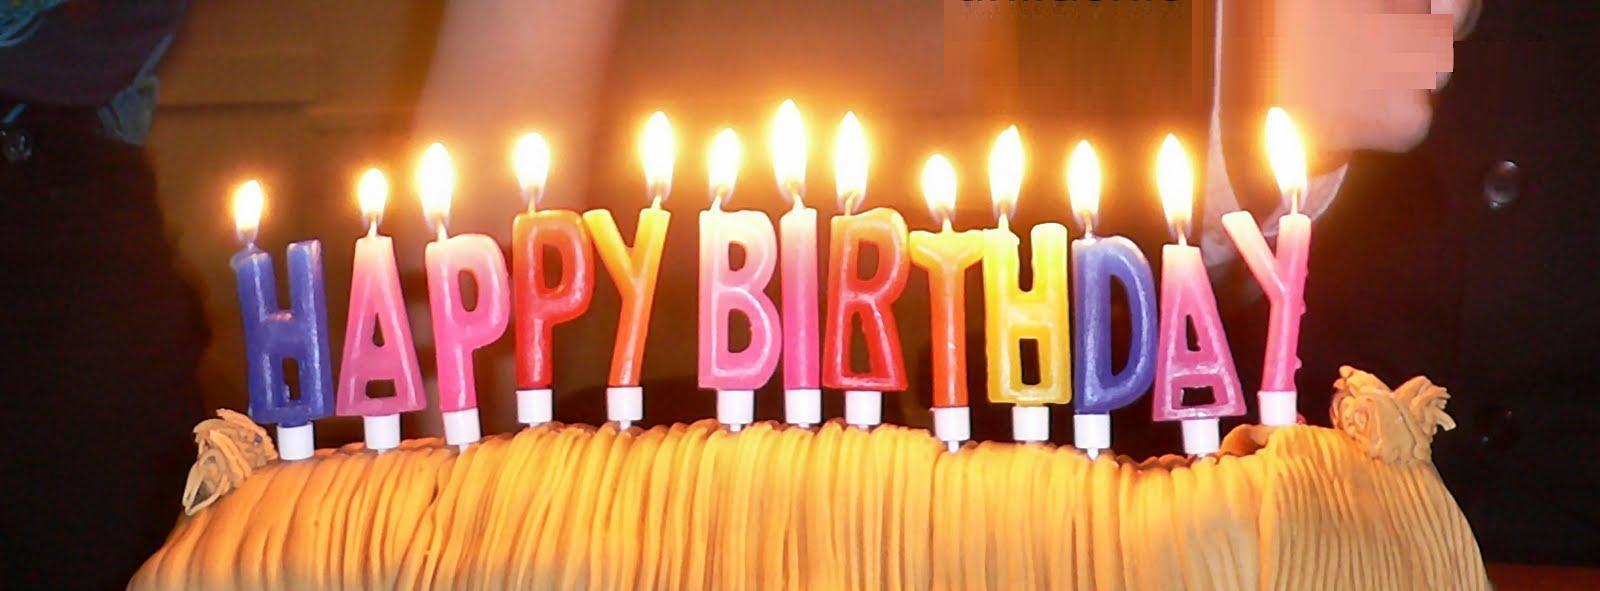 free happy birthday HD image Large Image